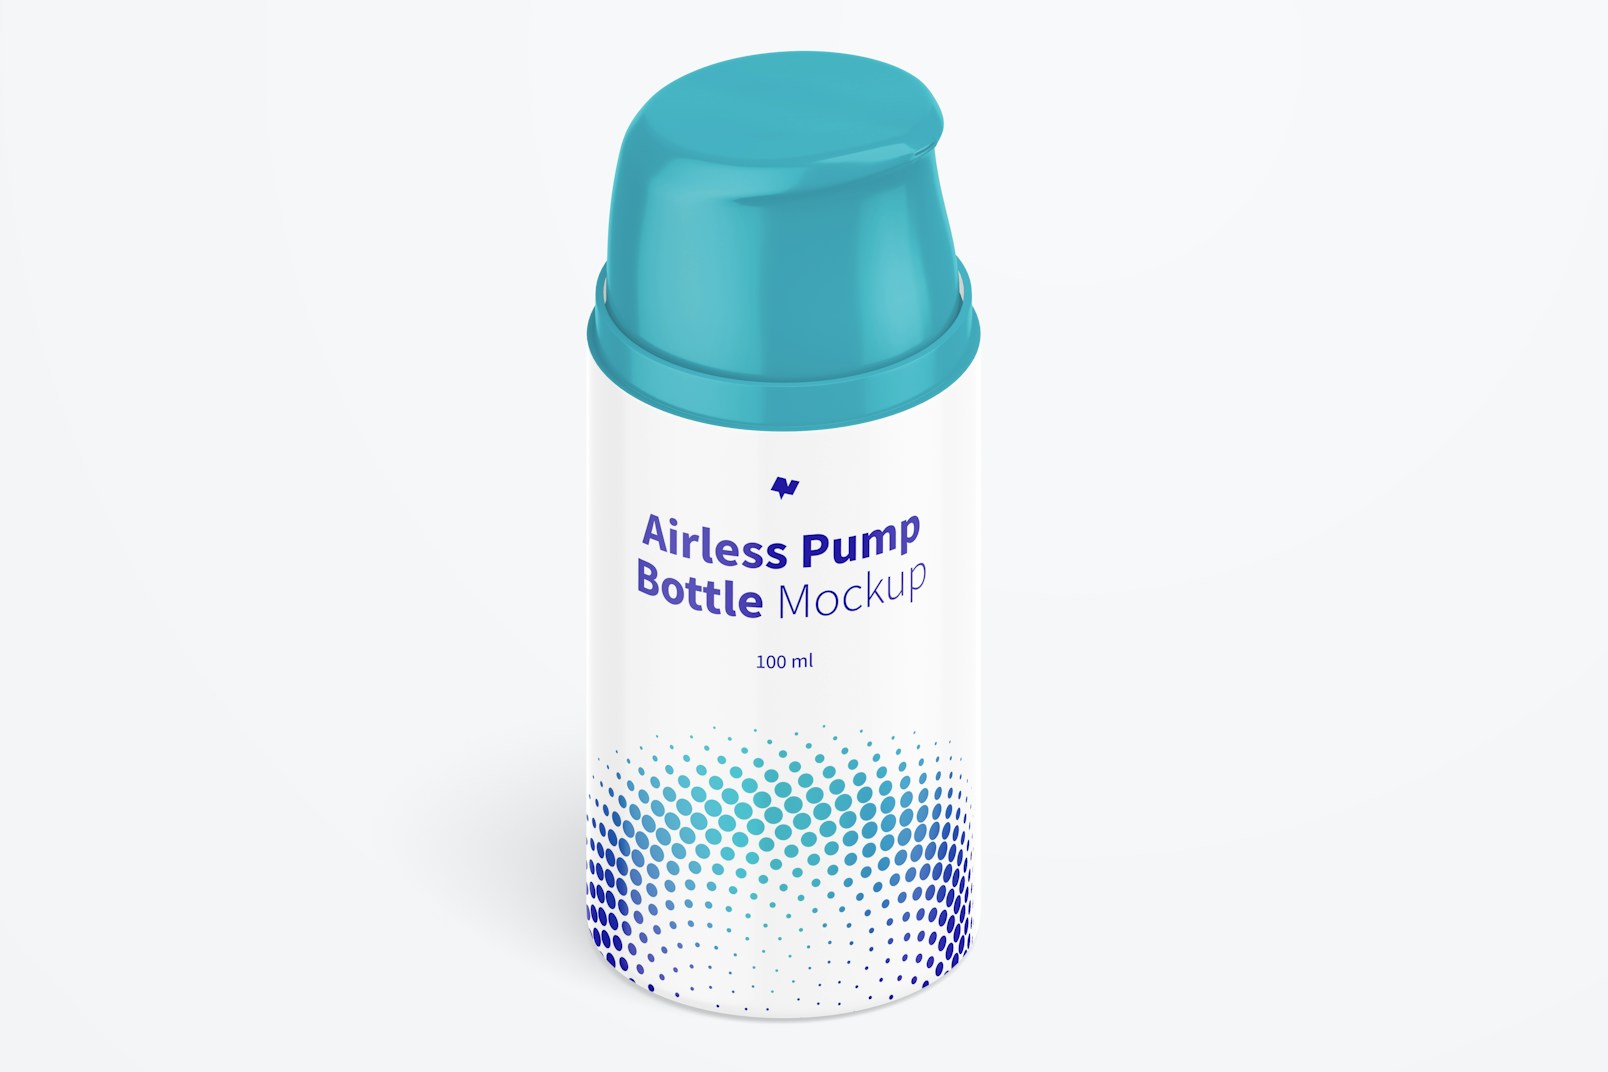 100 ml Airless Pump Bottle Mockup, Isometric View